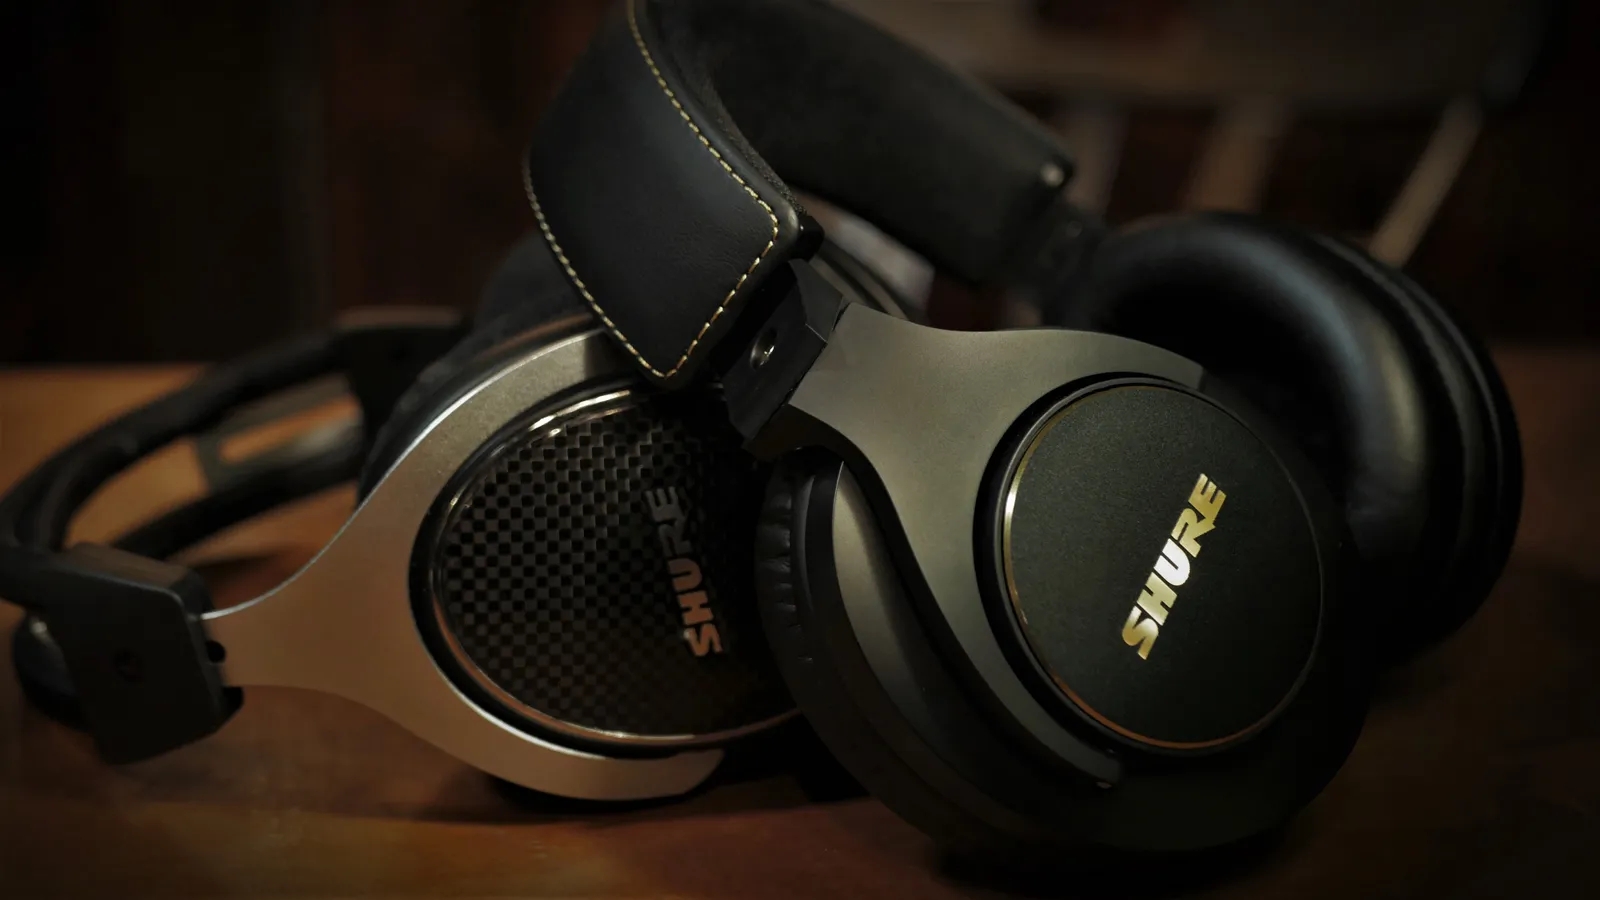 Best Studio Headphones - Shure SRH80A and SRH1540